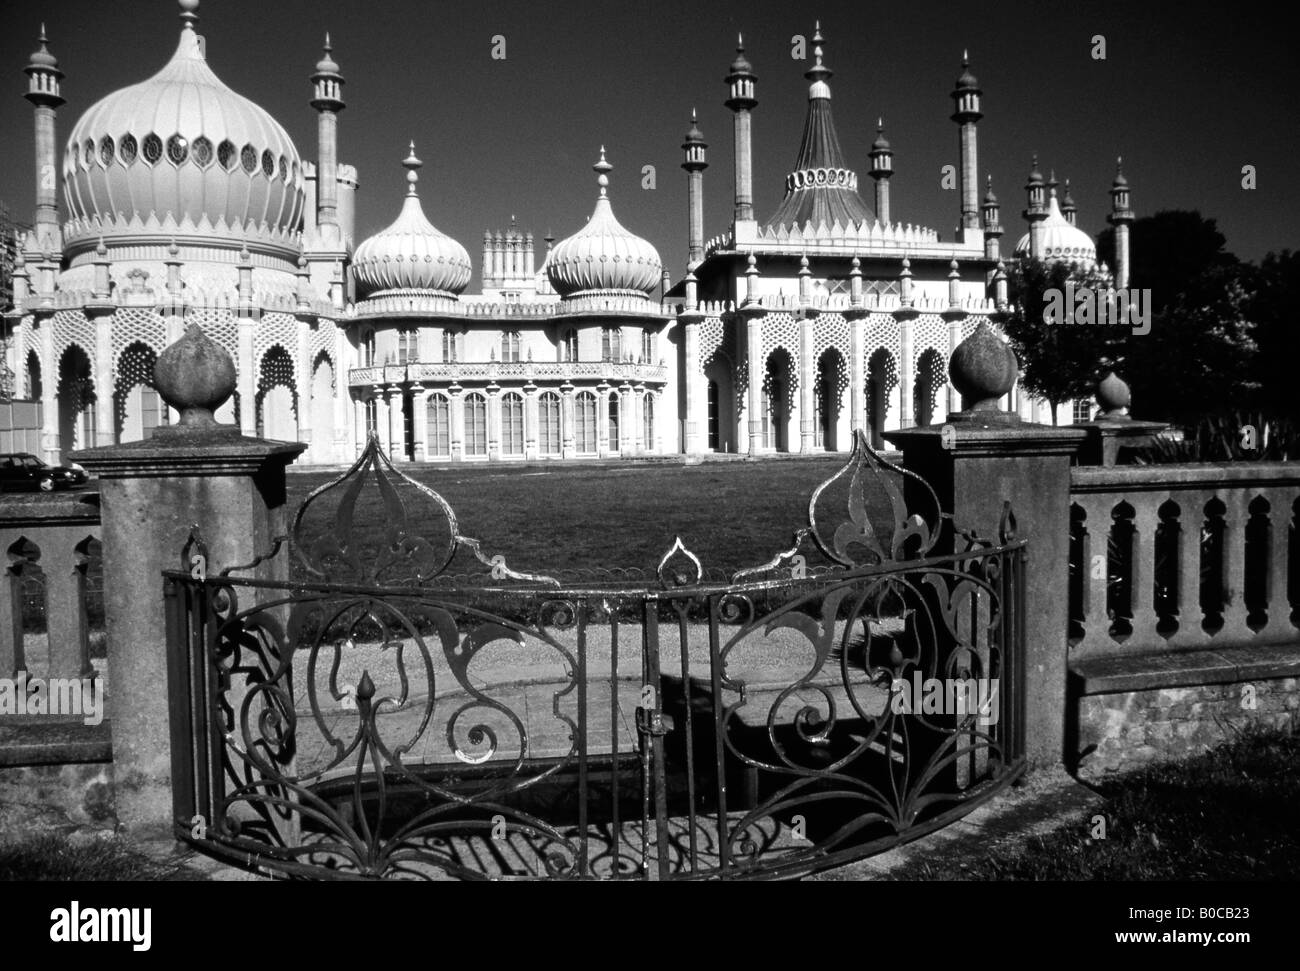 Royal pavilion Black and White Stock Photos & Images - Alamy